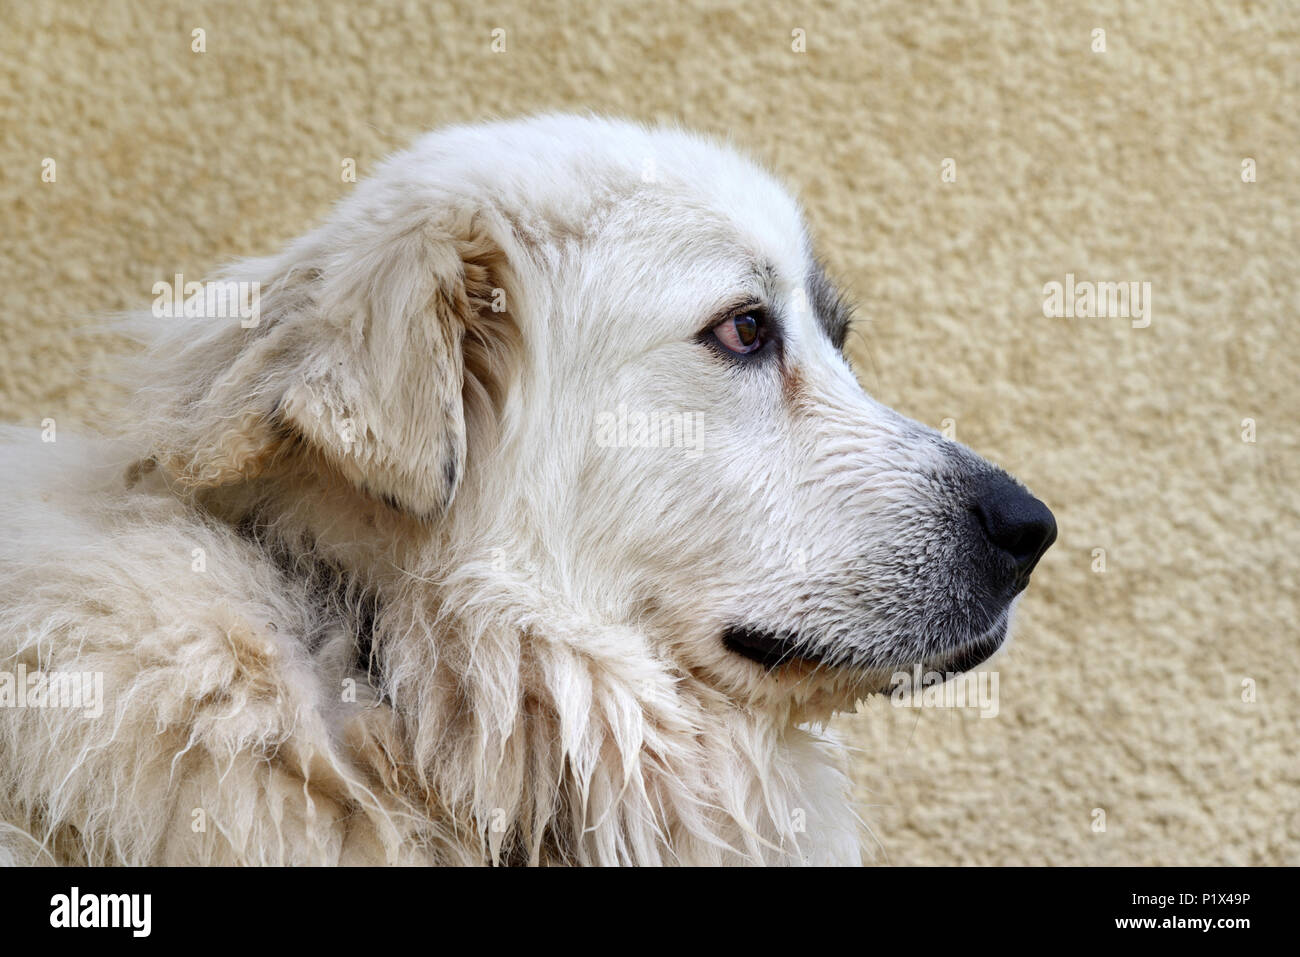 Portrait of a Pyrenean Mountain Dog or Sheepdog aka Great Pyrenees, Patou ot Pastou used as a Livestock Guardian Dog or Sheep Dog Stock Photo